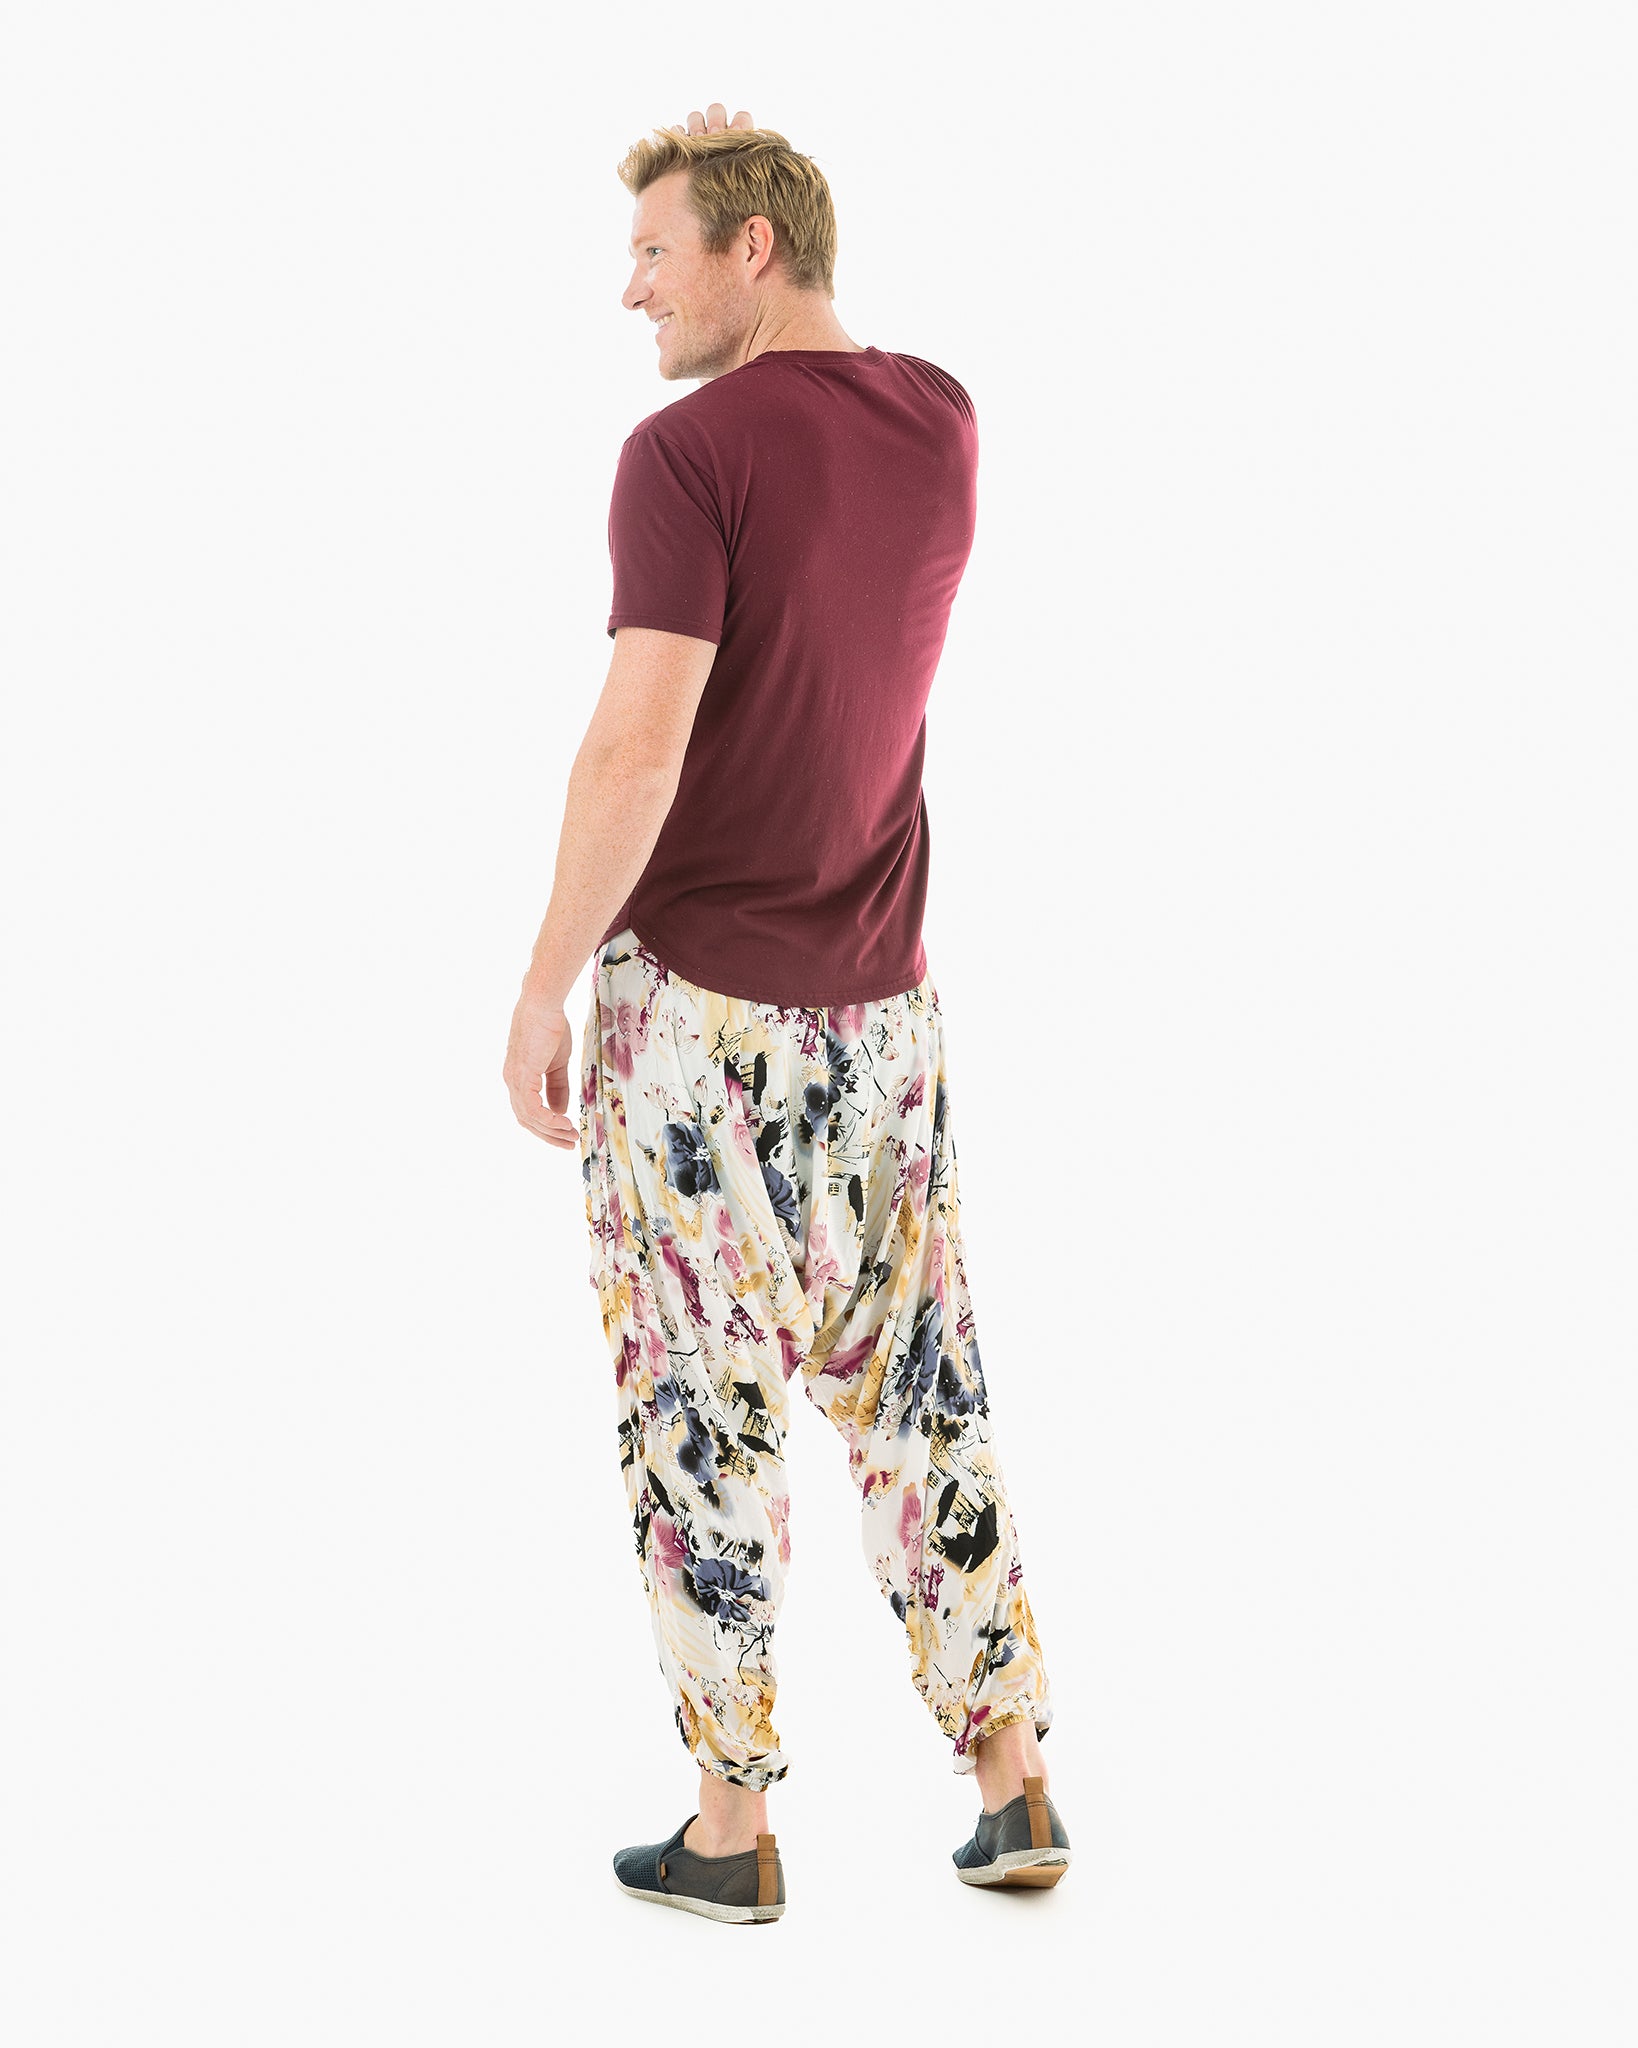 JEEVAN Tropical Floral Pant | Floral pants, Mens workout pants, Indian  clothing brands